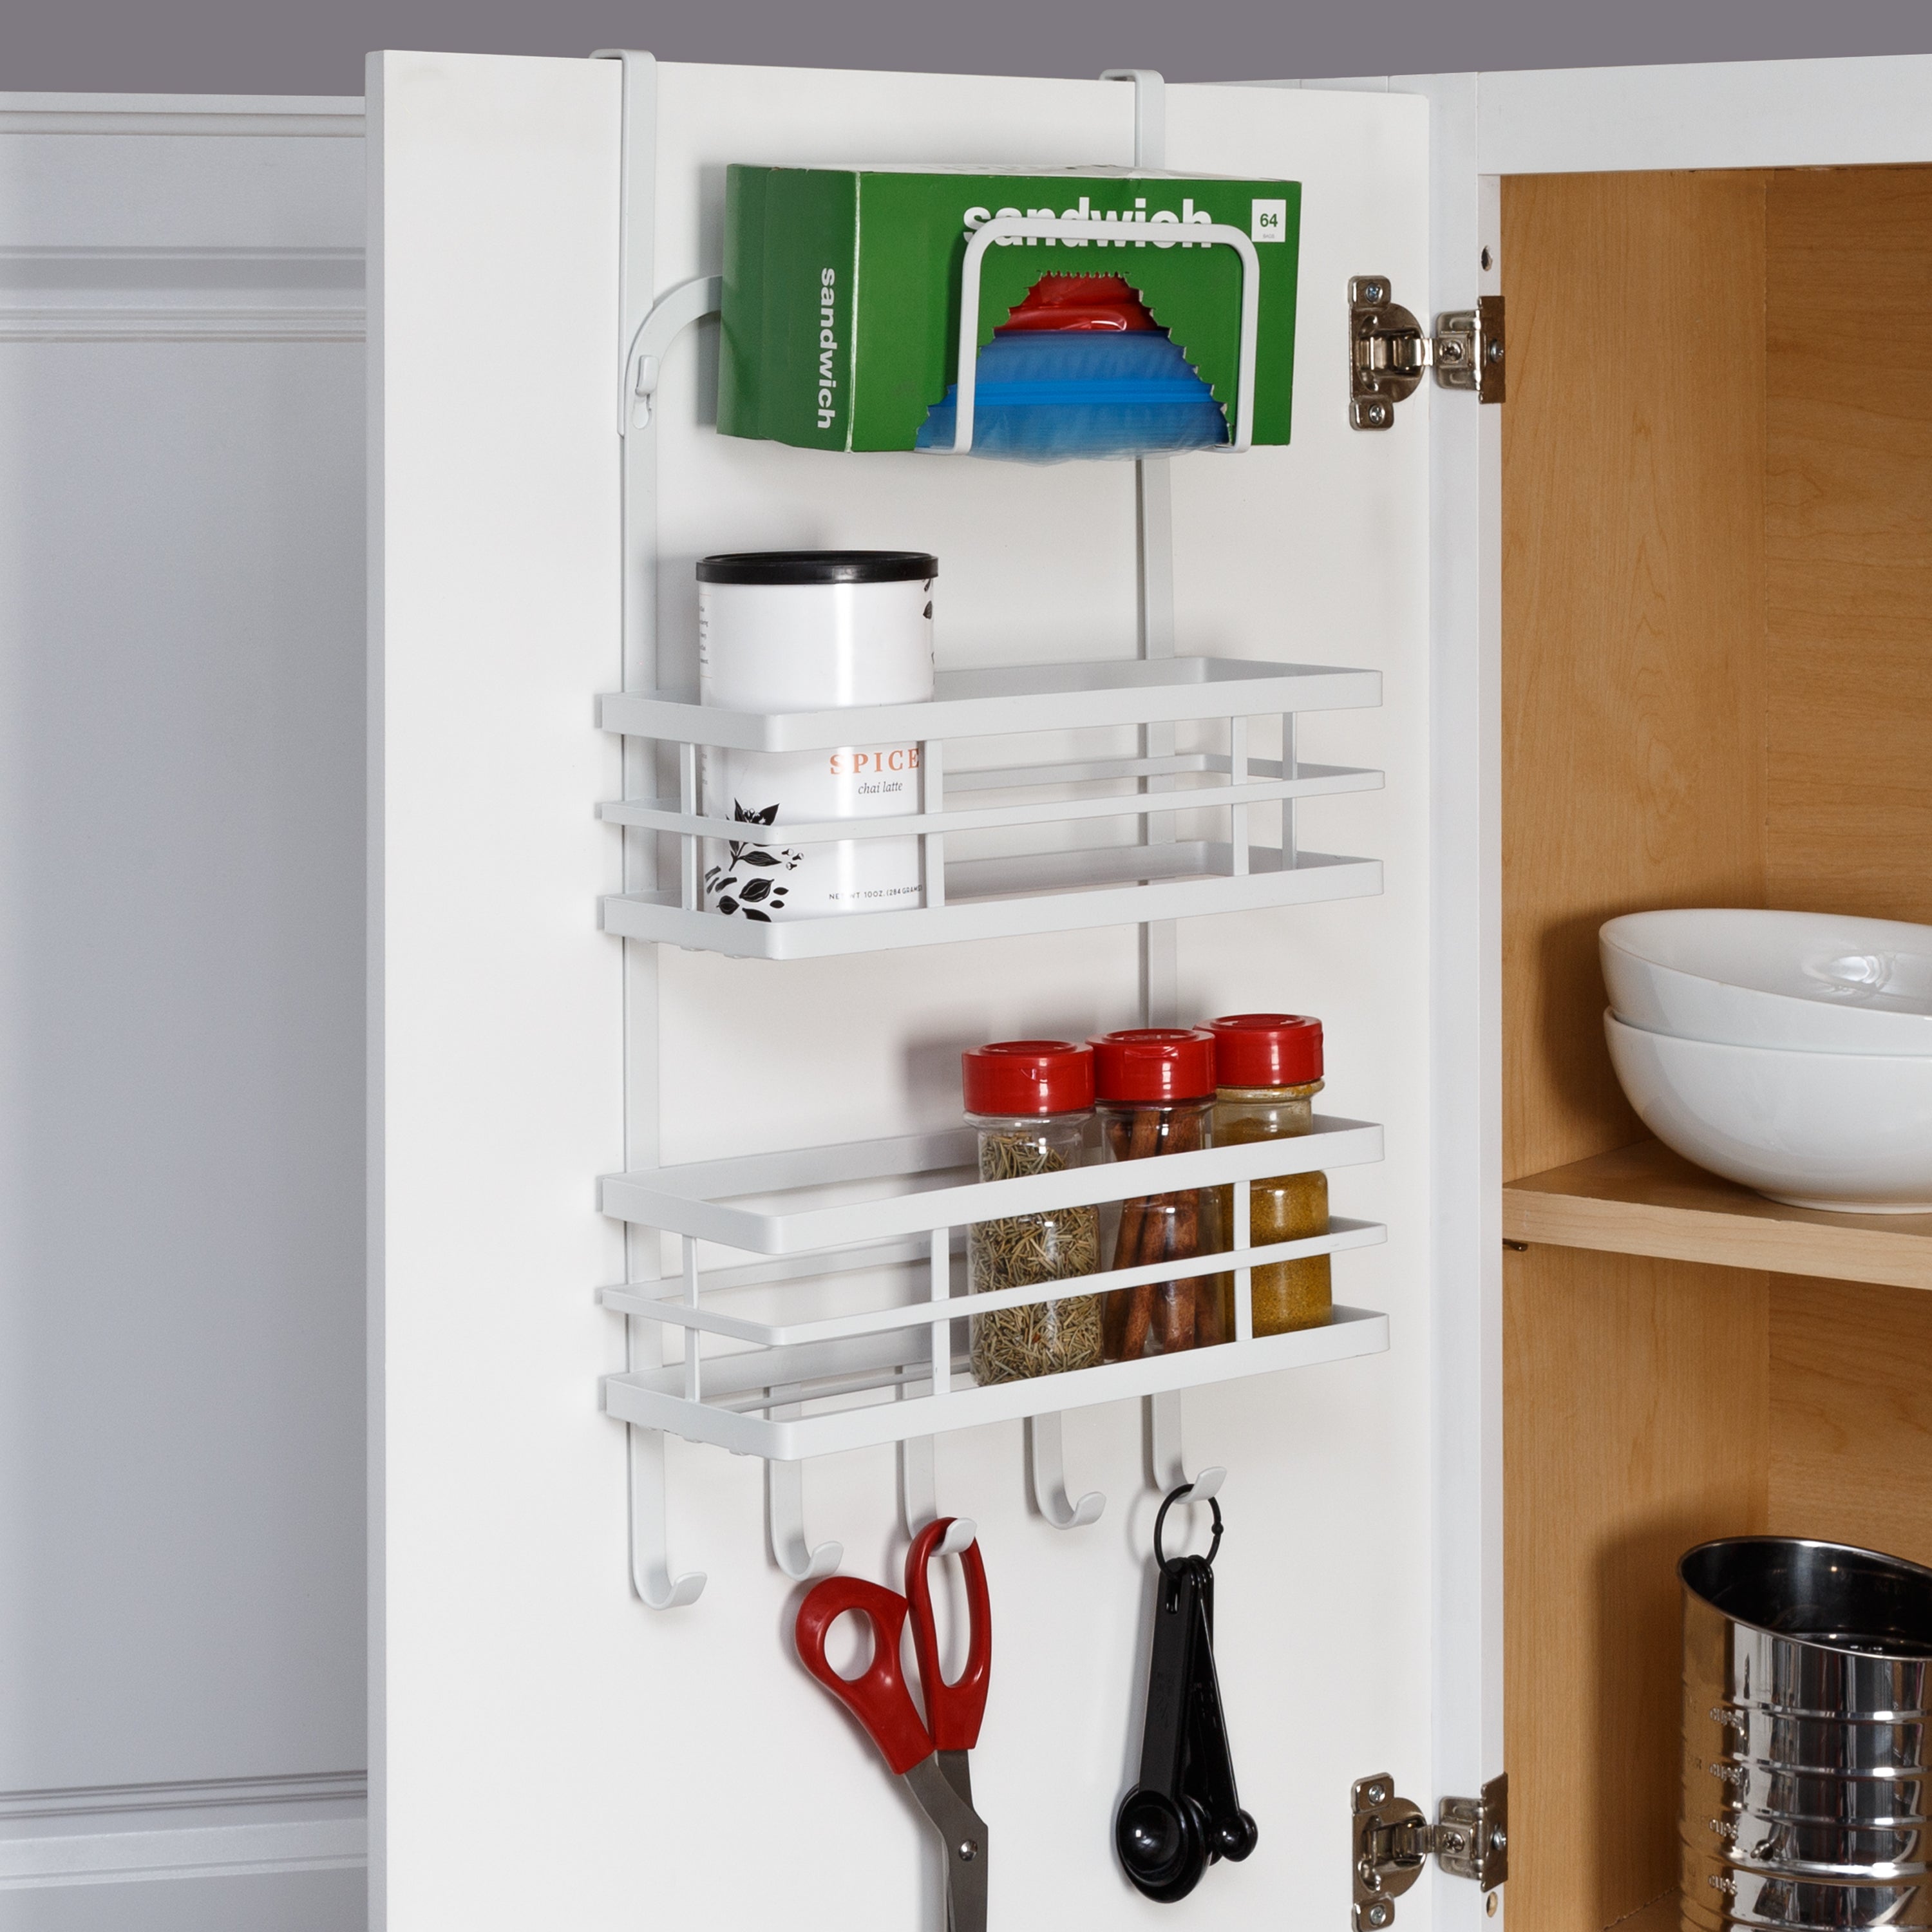 Kitchen Bathroom Organizer And Storage Racks 2 Tier Pull-out Type